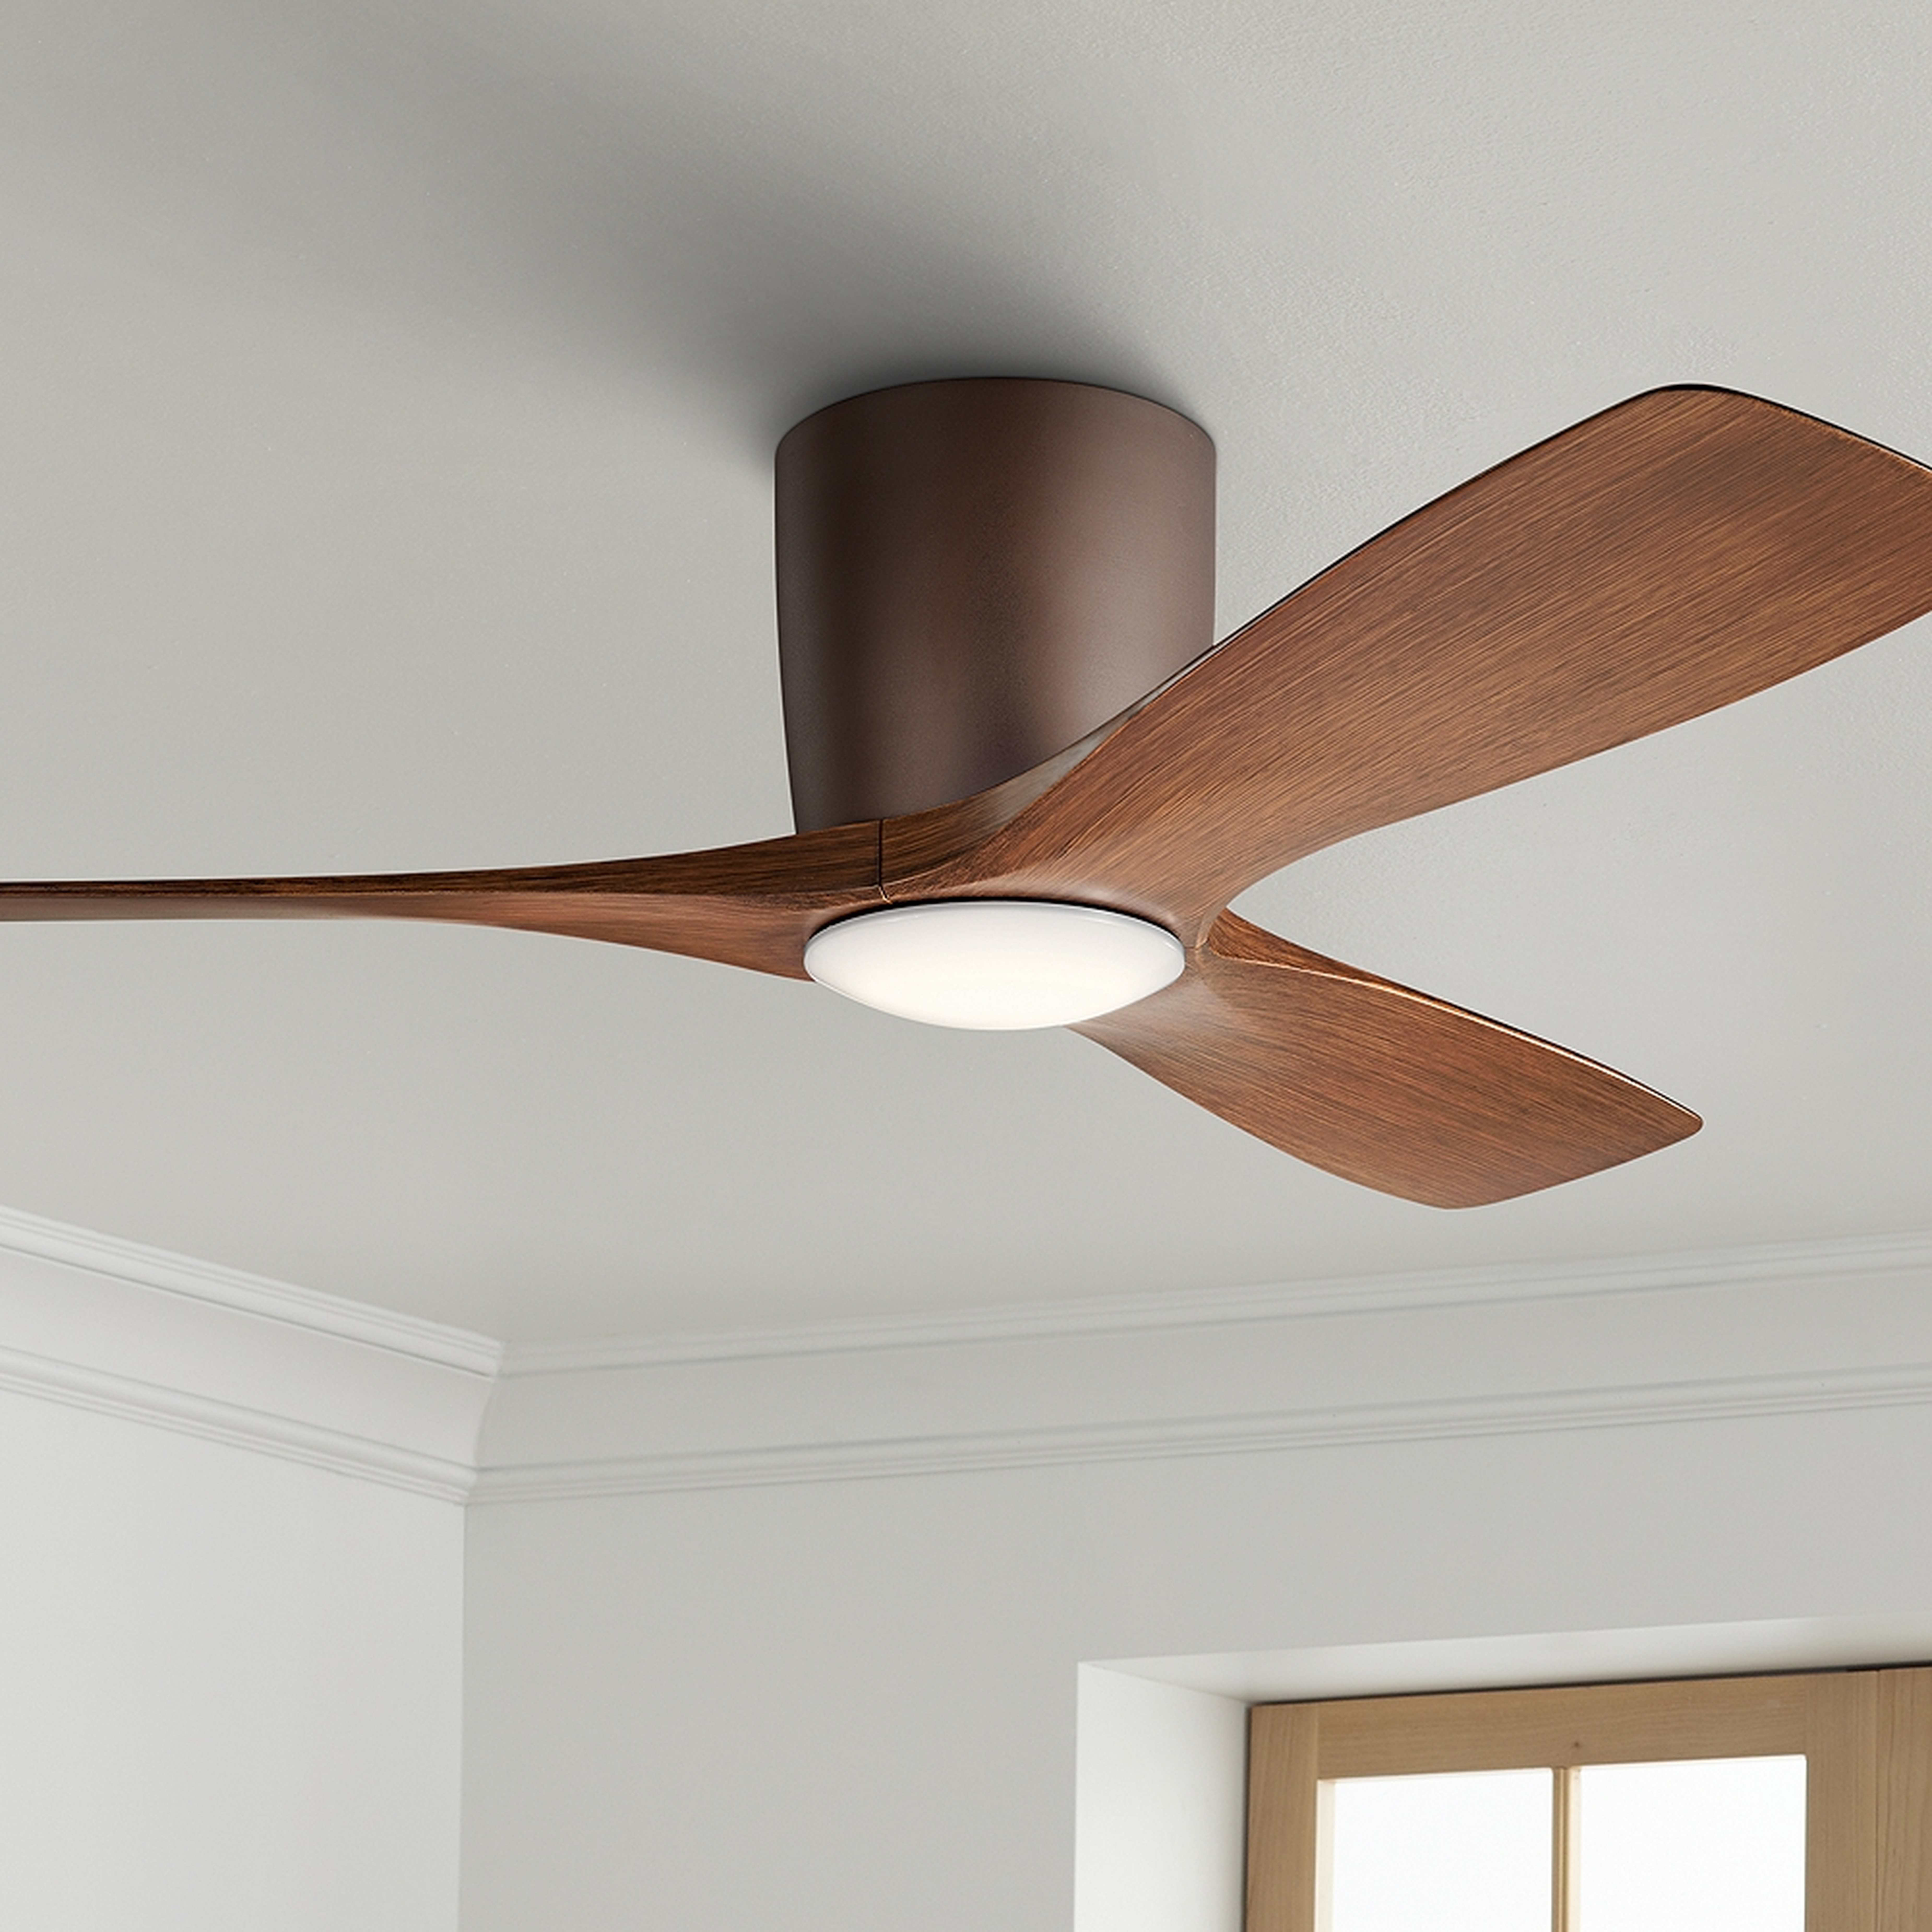 48" Kichler Volos Satin Bronze Hugger LED Ceiling Fan - Style # 80A23 - Lamps Plus